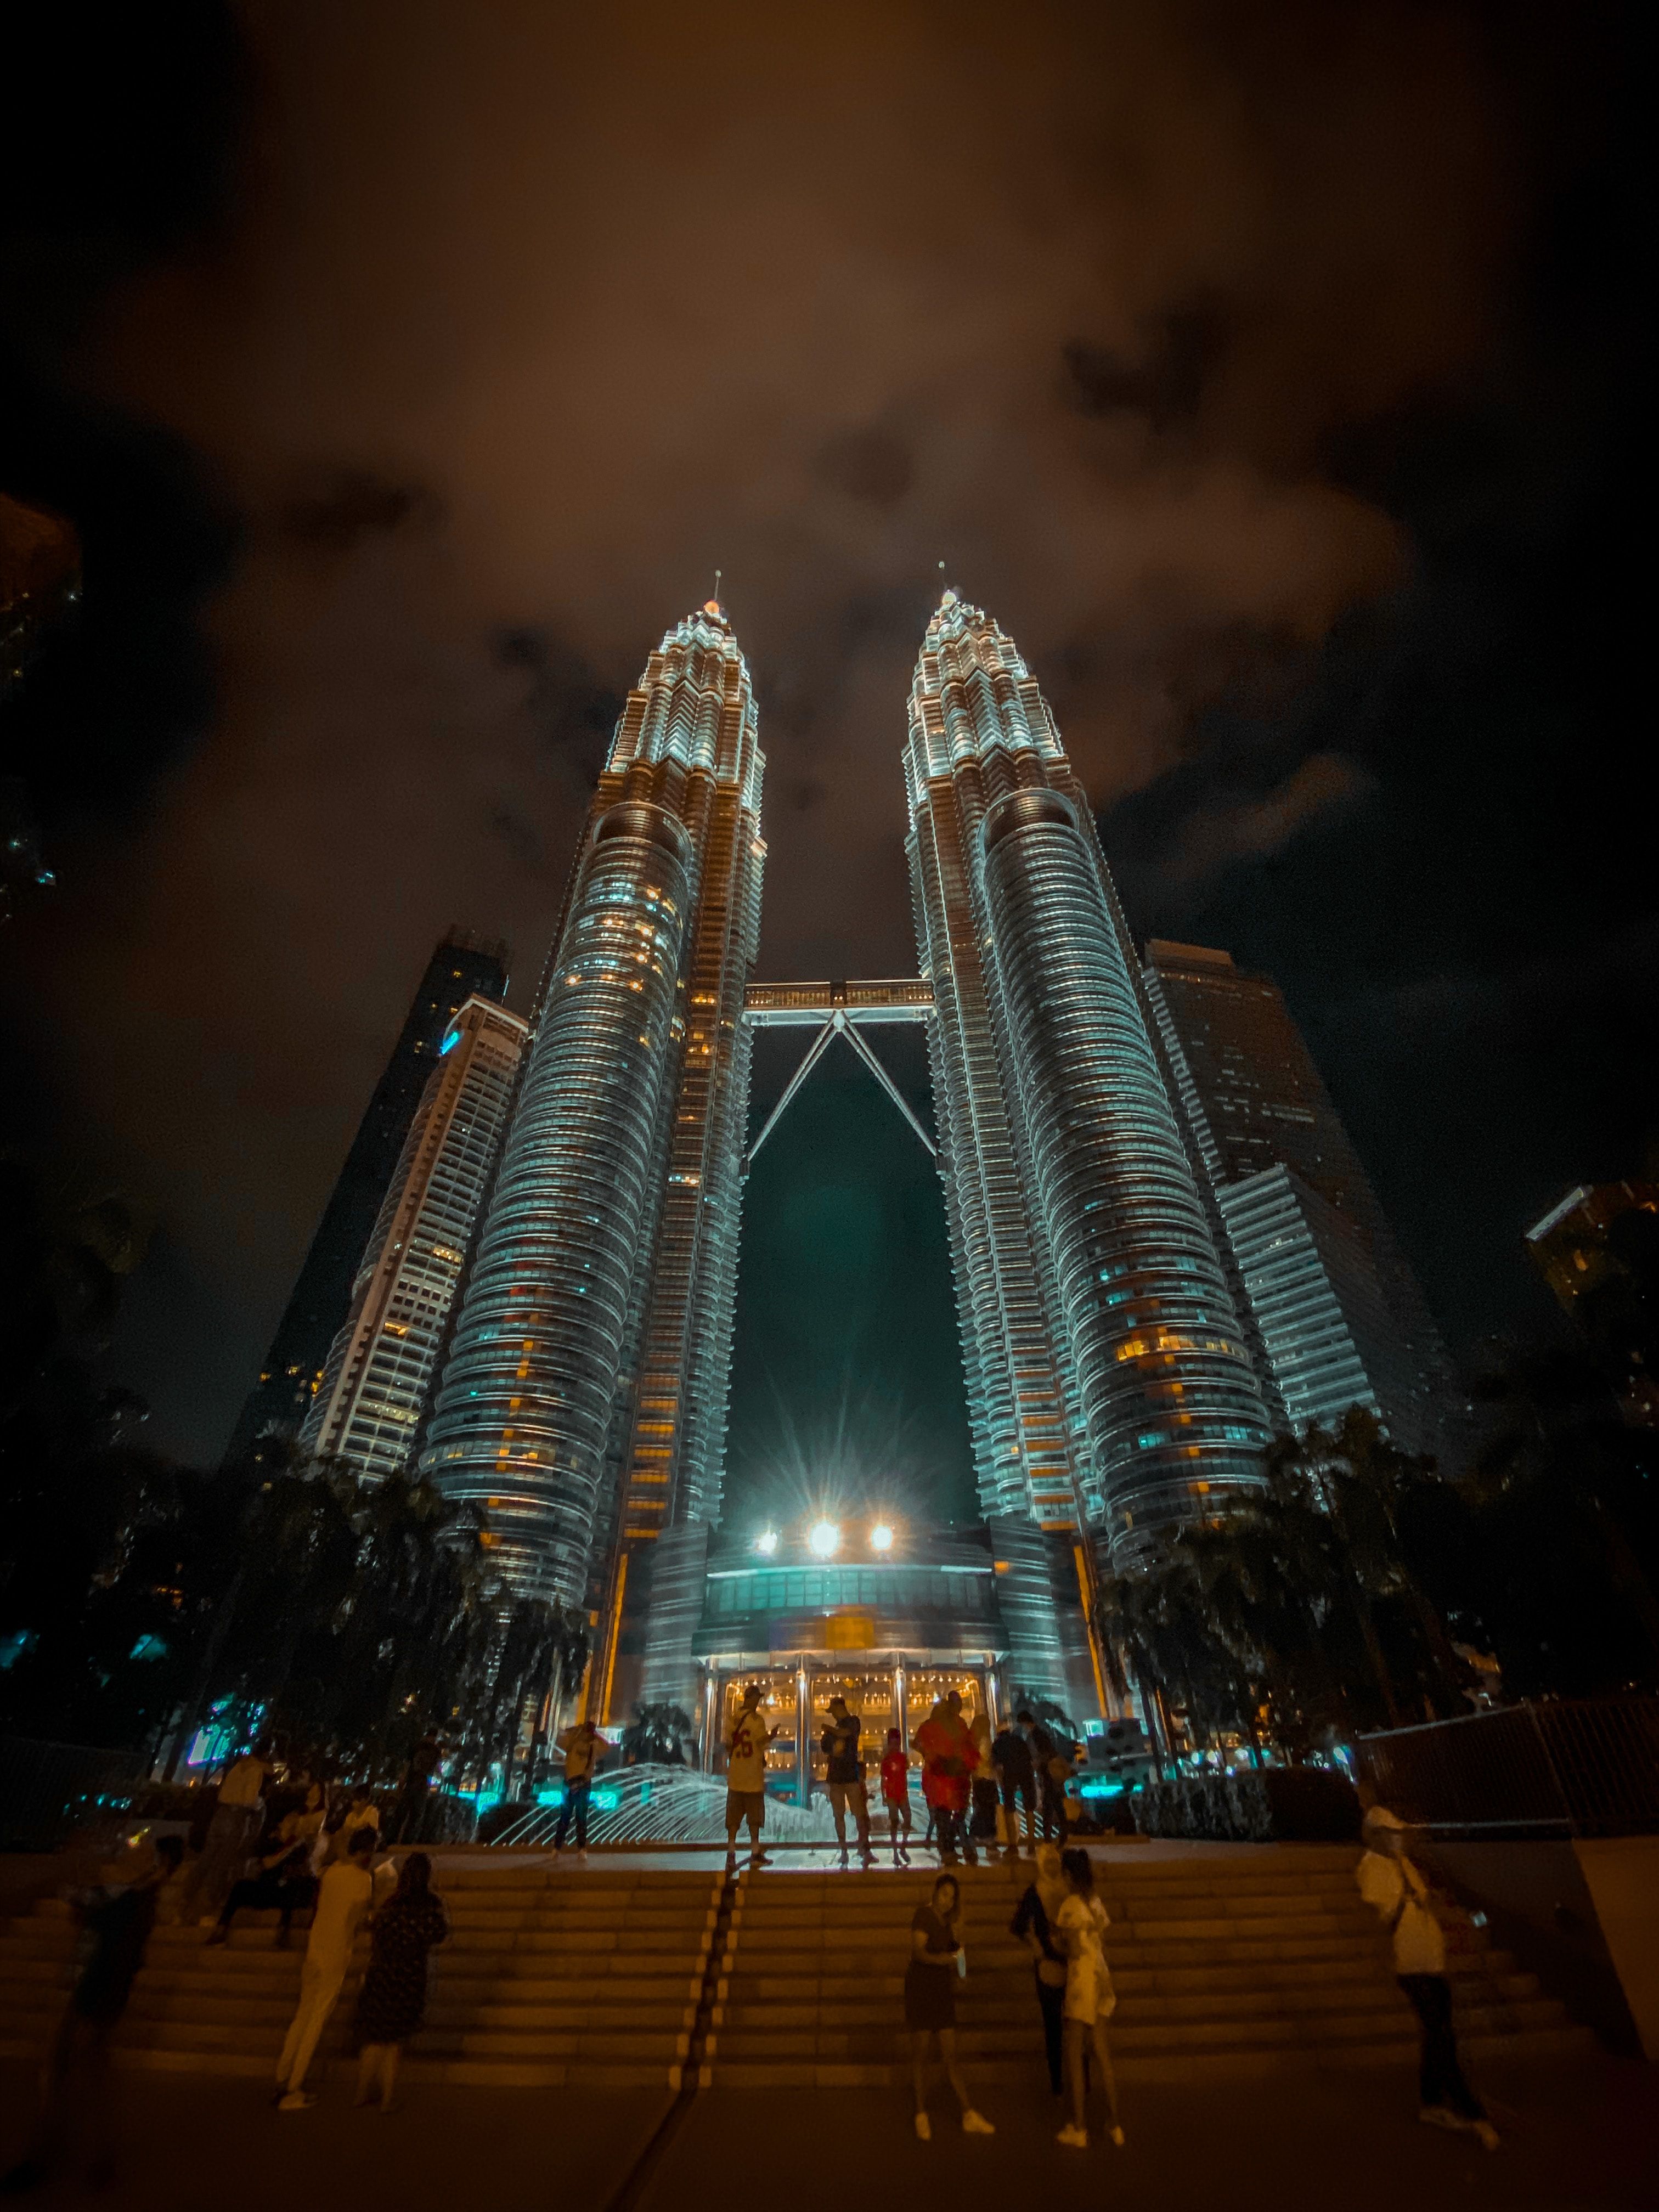 Suria KLCC Mall is beneath the Petronas Twin Towers